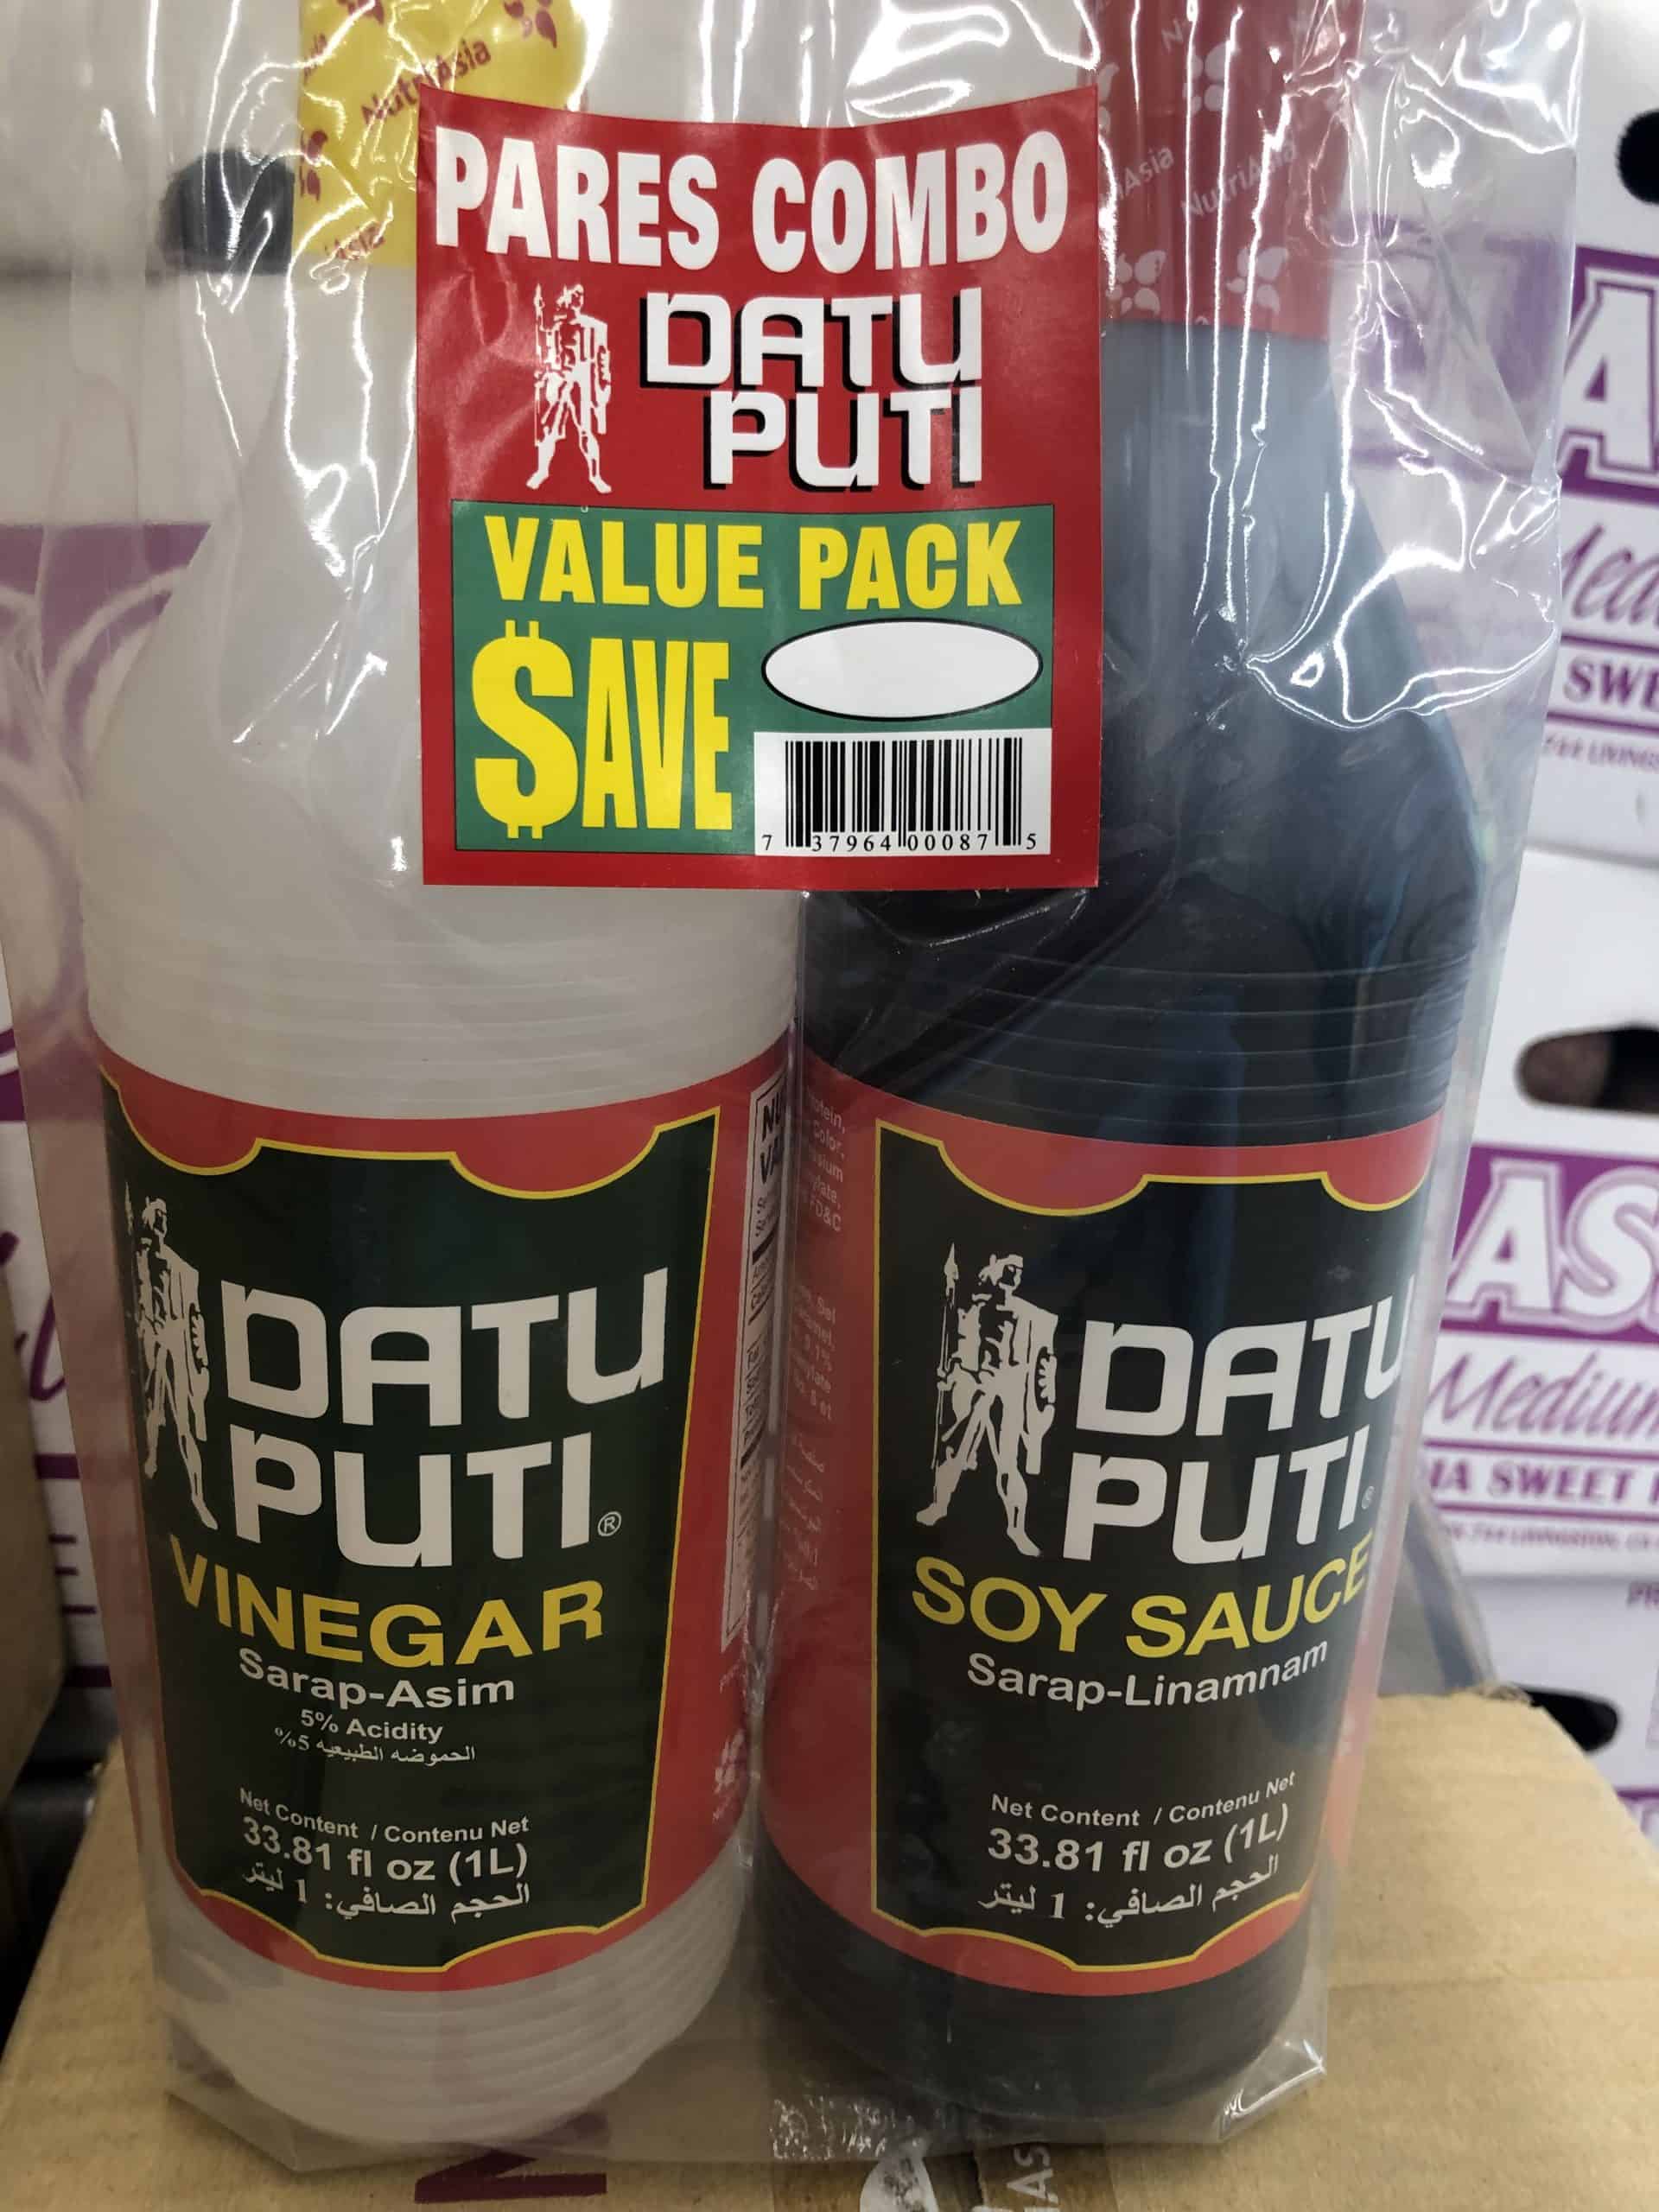 Datu Puti Value Pack of Vinegar and Soy Sauce Bottles